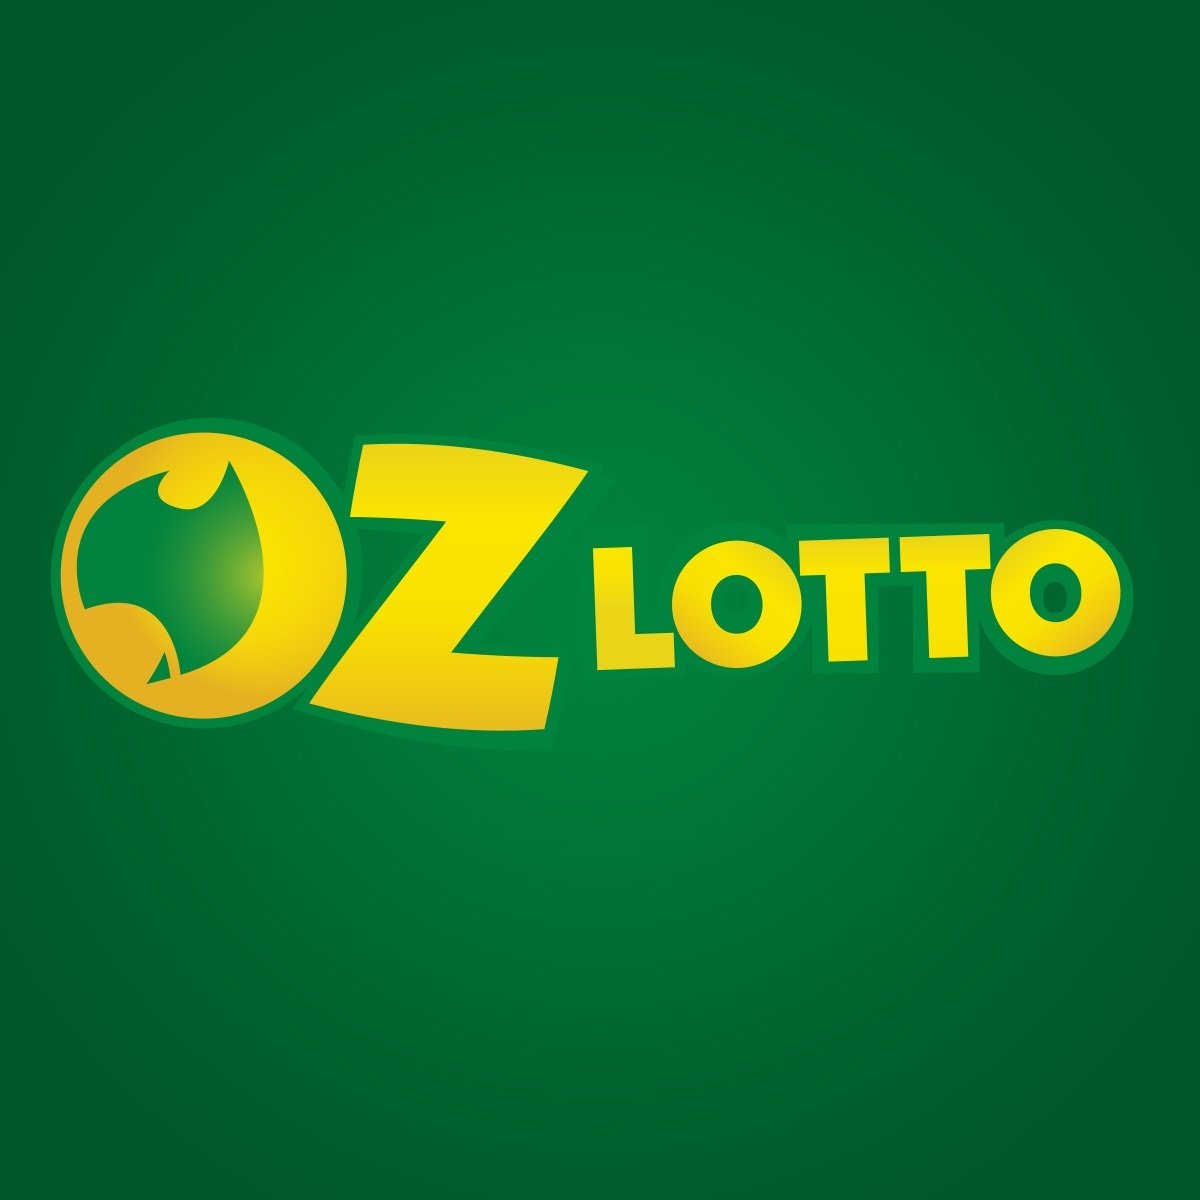 Oz Lotto - Online | Oz Lotteries1200 x 1200